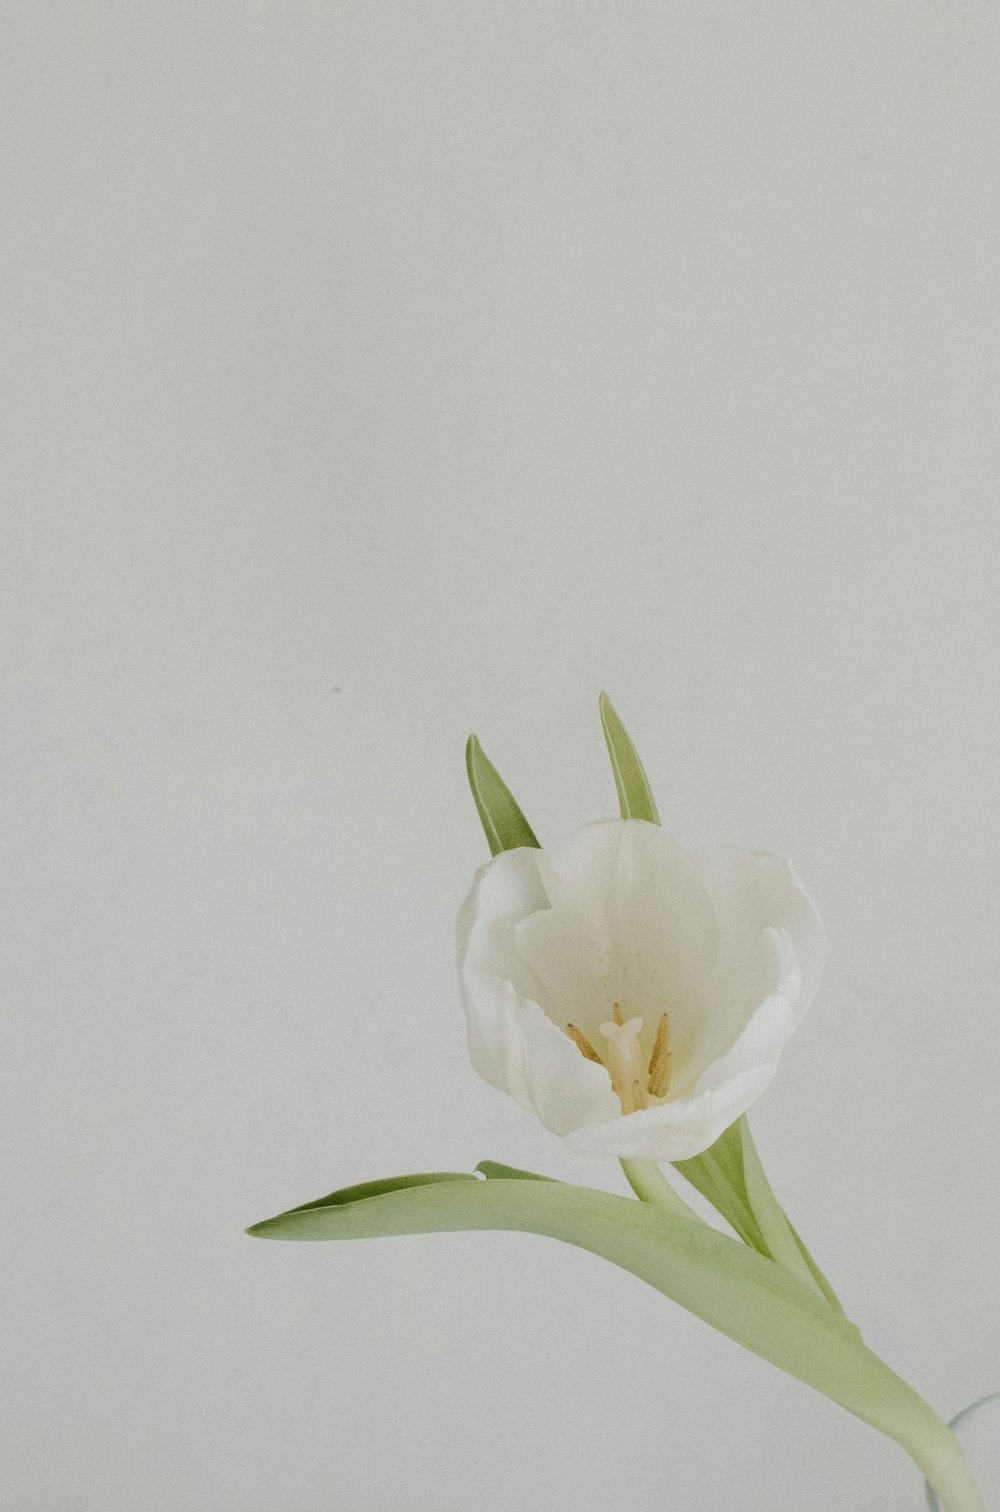 a single white tulip in a glass vase